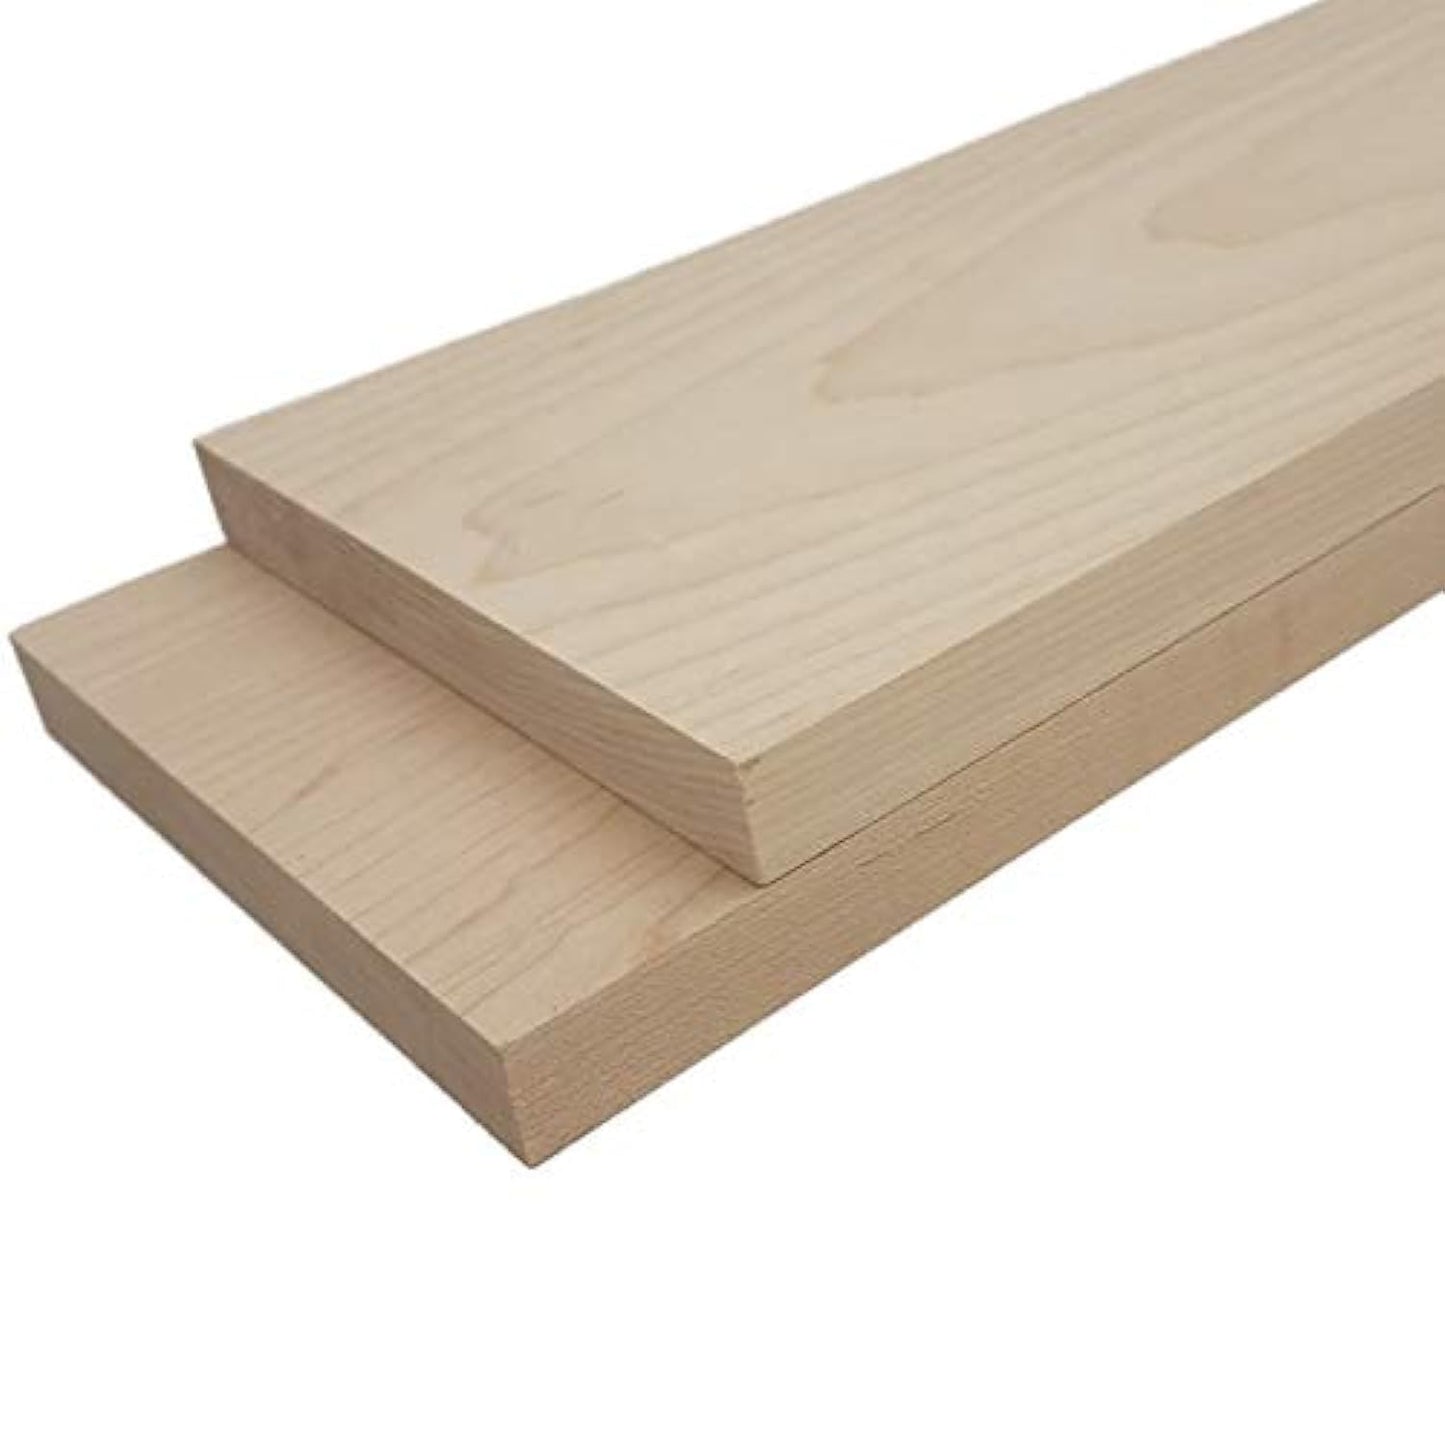 Maple Lumber Boards 3/4" x 6" (3/4" x 6" x 12") (2Pc)